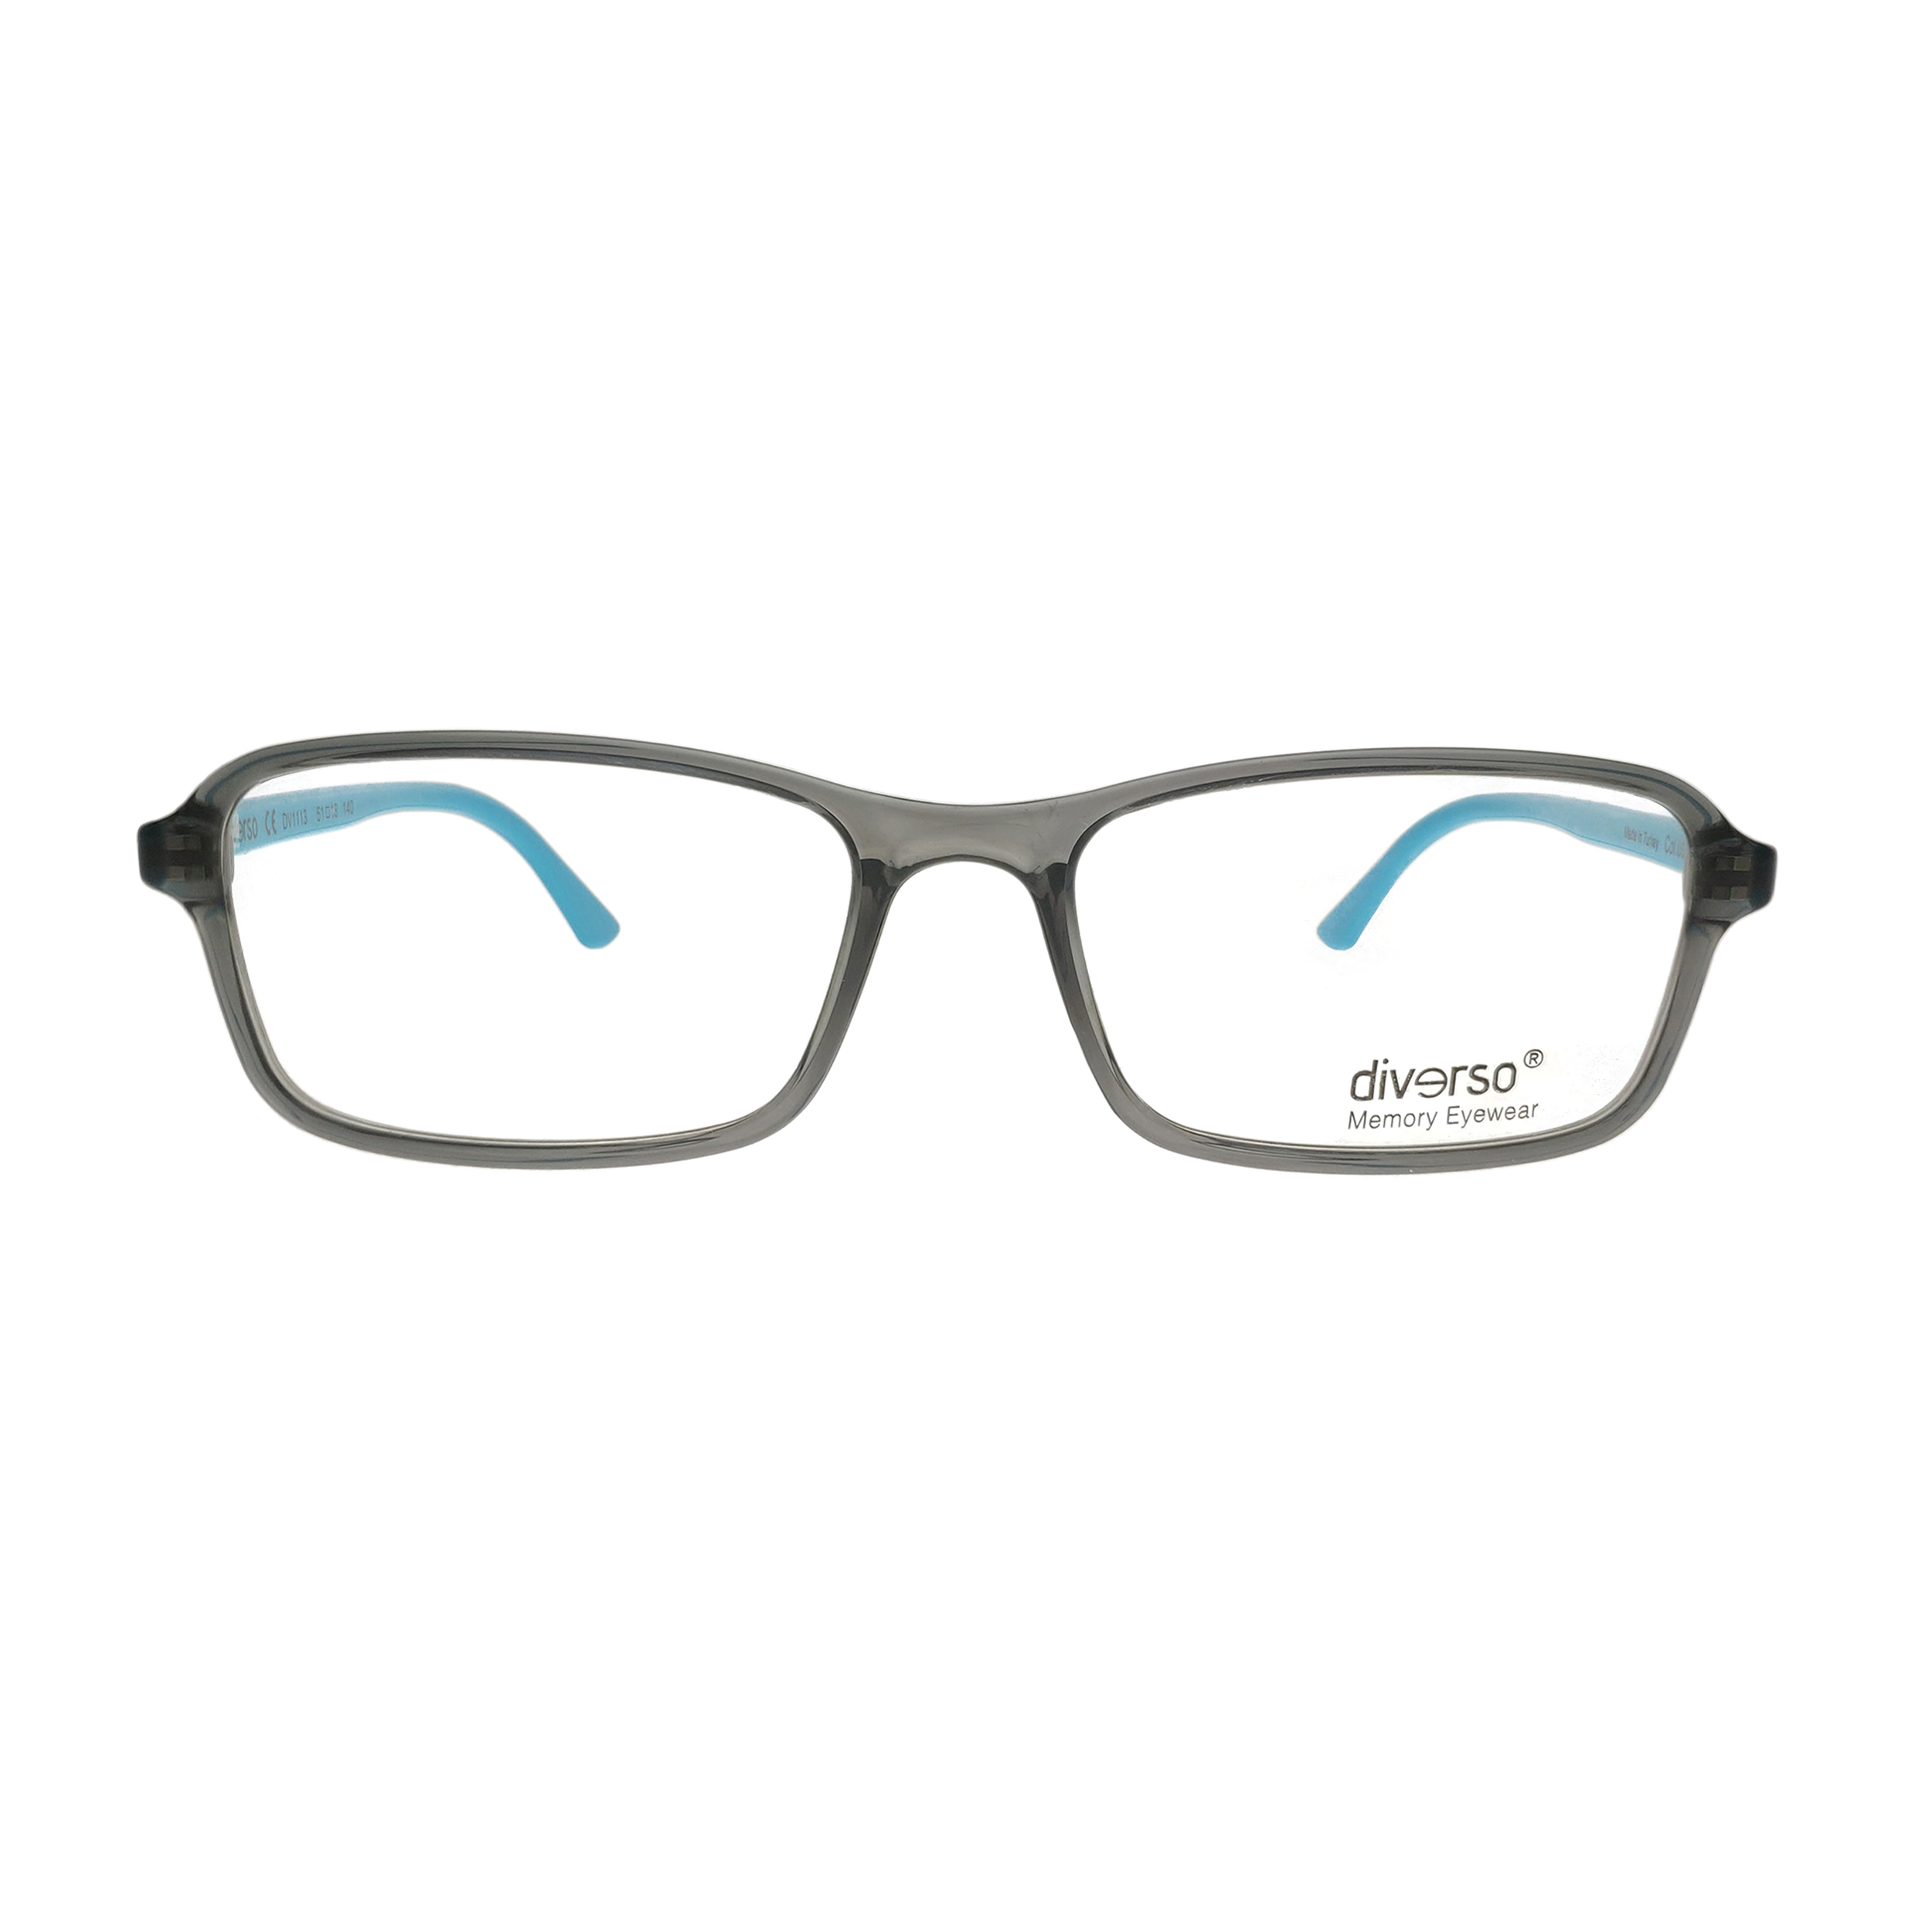 فریم عینک طبی دیورسو مدل 9 - - DV1113C543 - 51.18.140